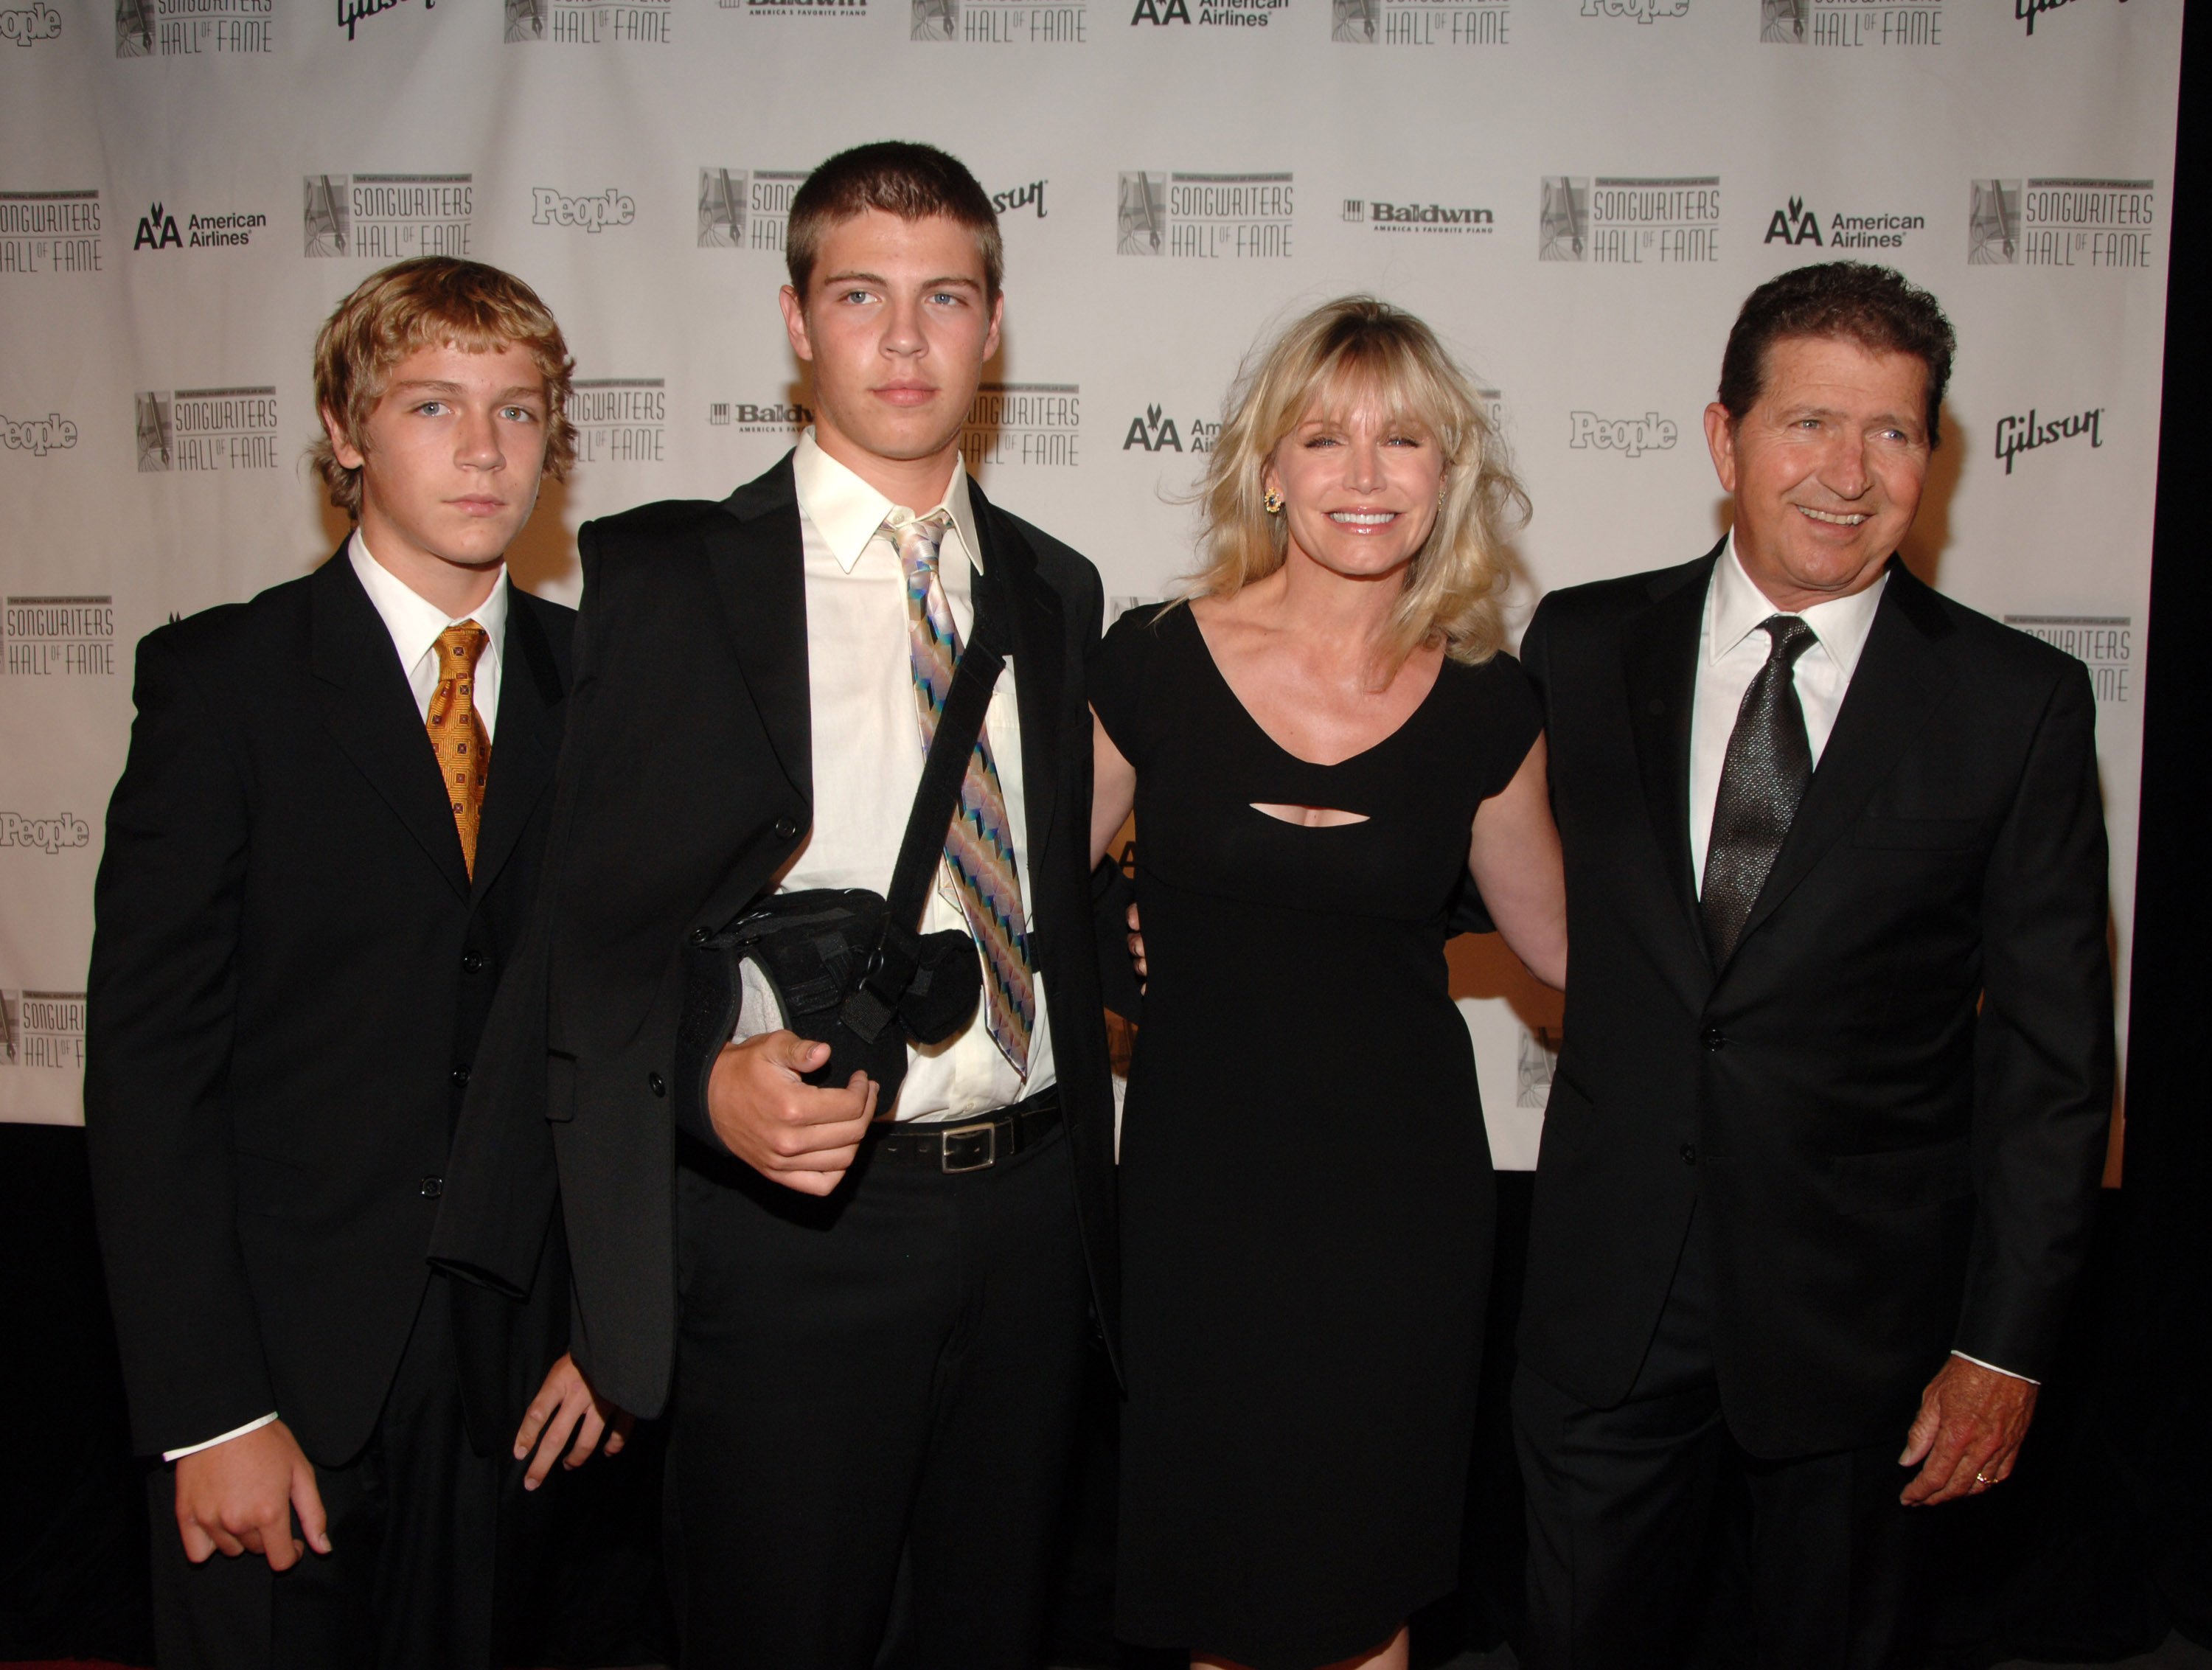 Mac Davis with family in 2006